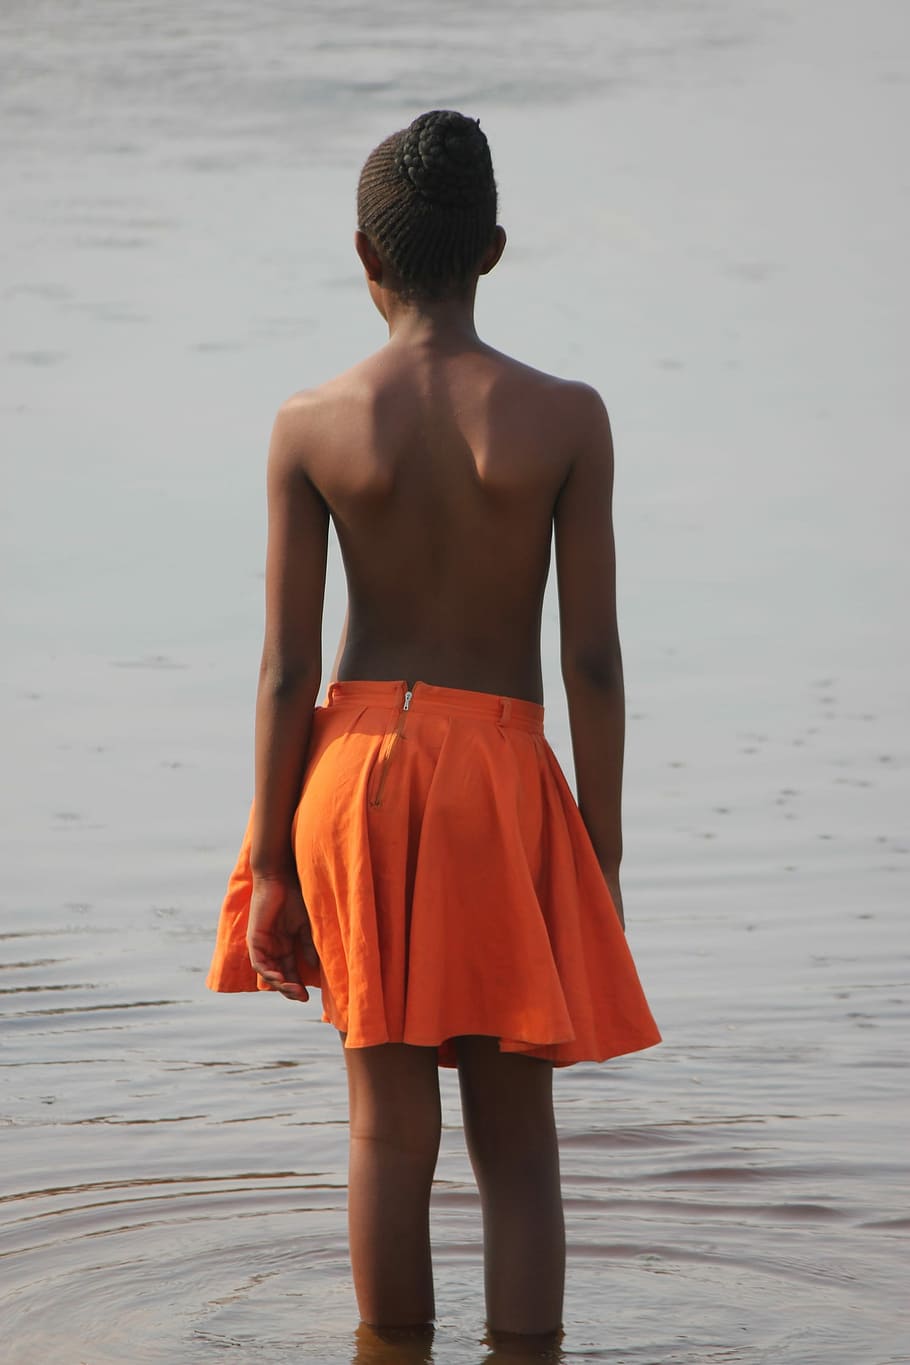 Girl, Orange, Water, Human, Beautiful, young people, person, woman, rear view, beach